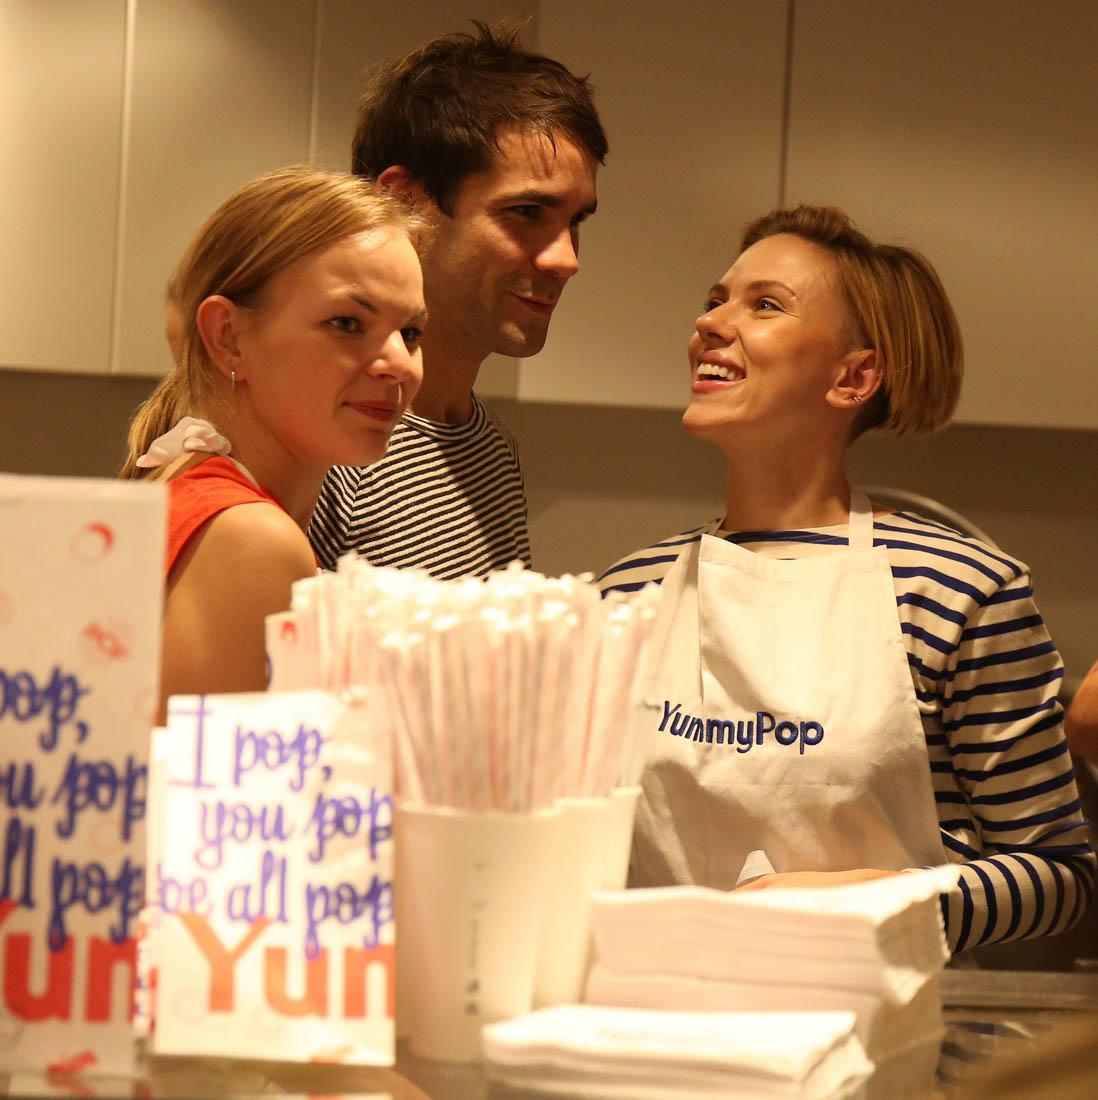 Scarlett Johansson opens gourmet popcorn shoppe called Yummy Pop in Paris with husband ...